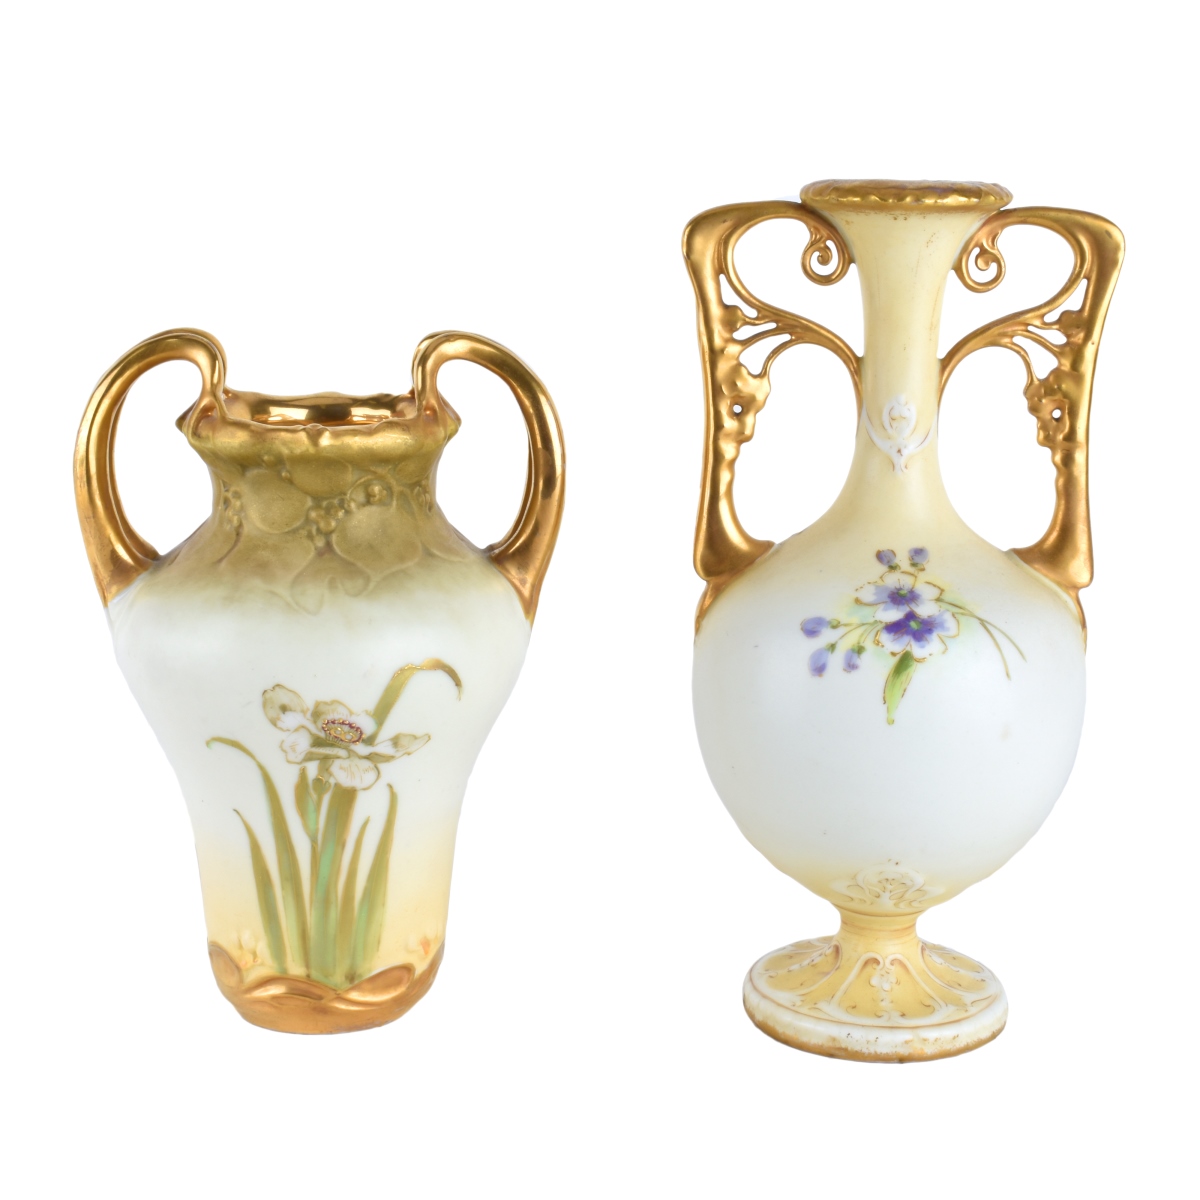 Two (2) Turn Teplitz Vases